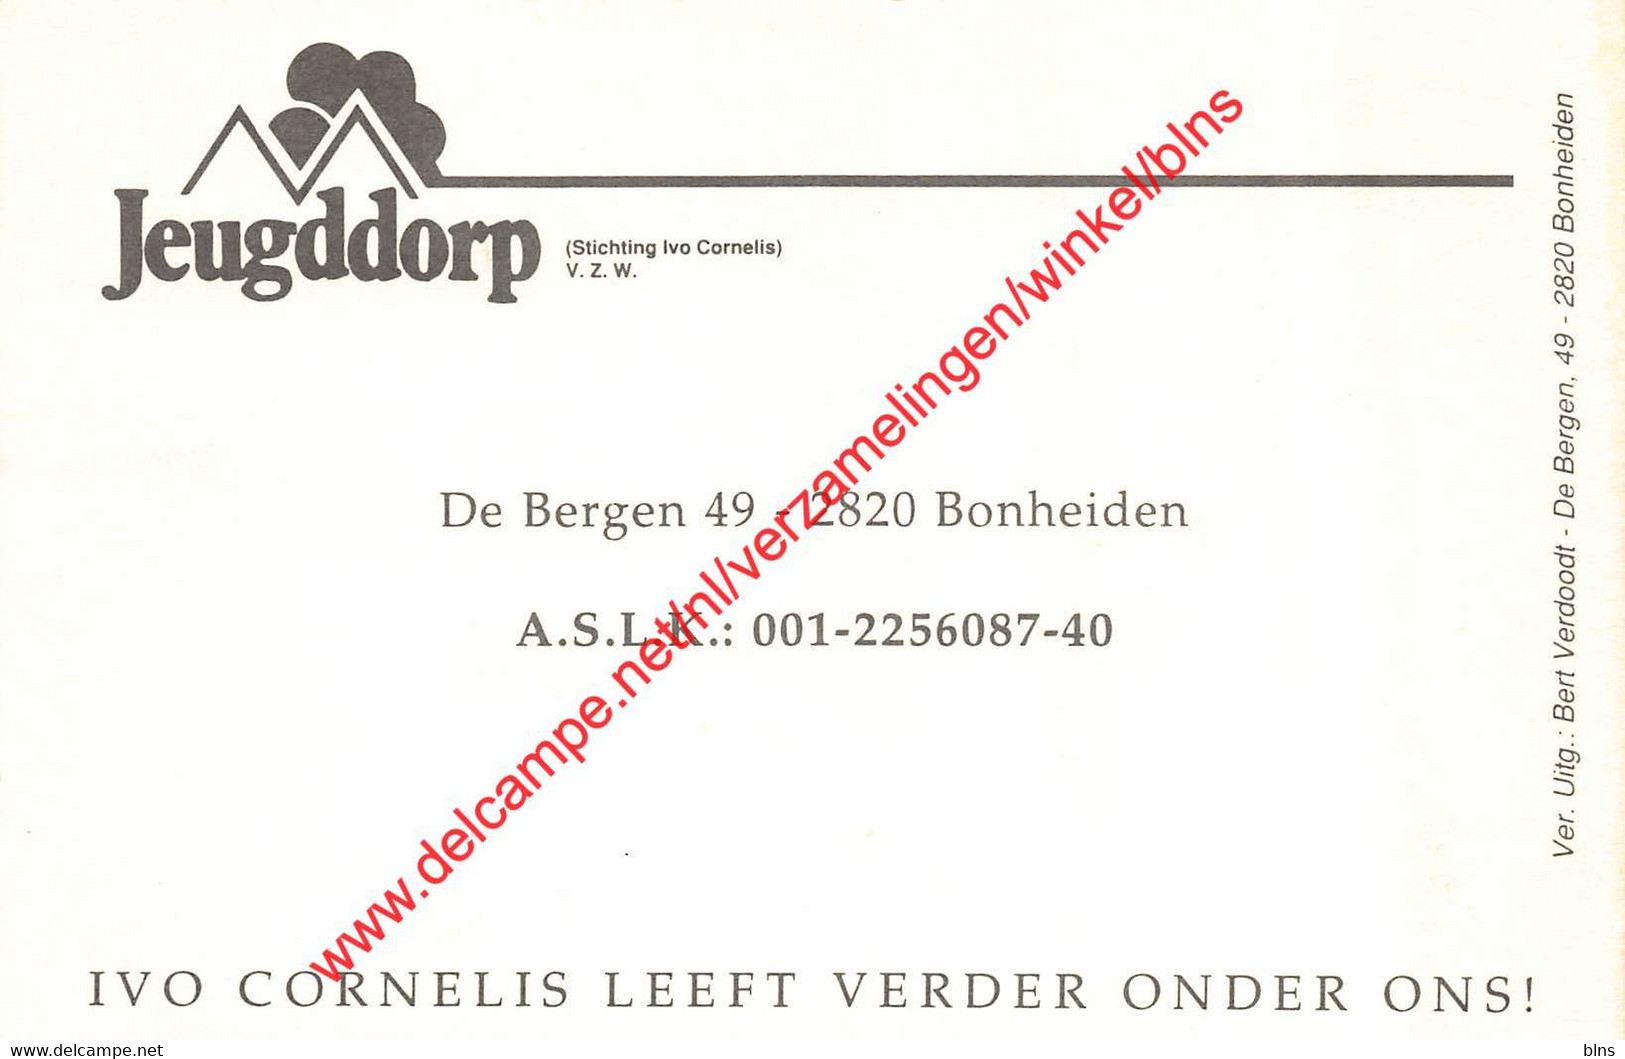 Jeugddorp - Stichting Ivo Cornelis - Bonheiden - Bonheiden